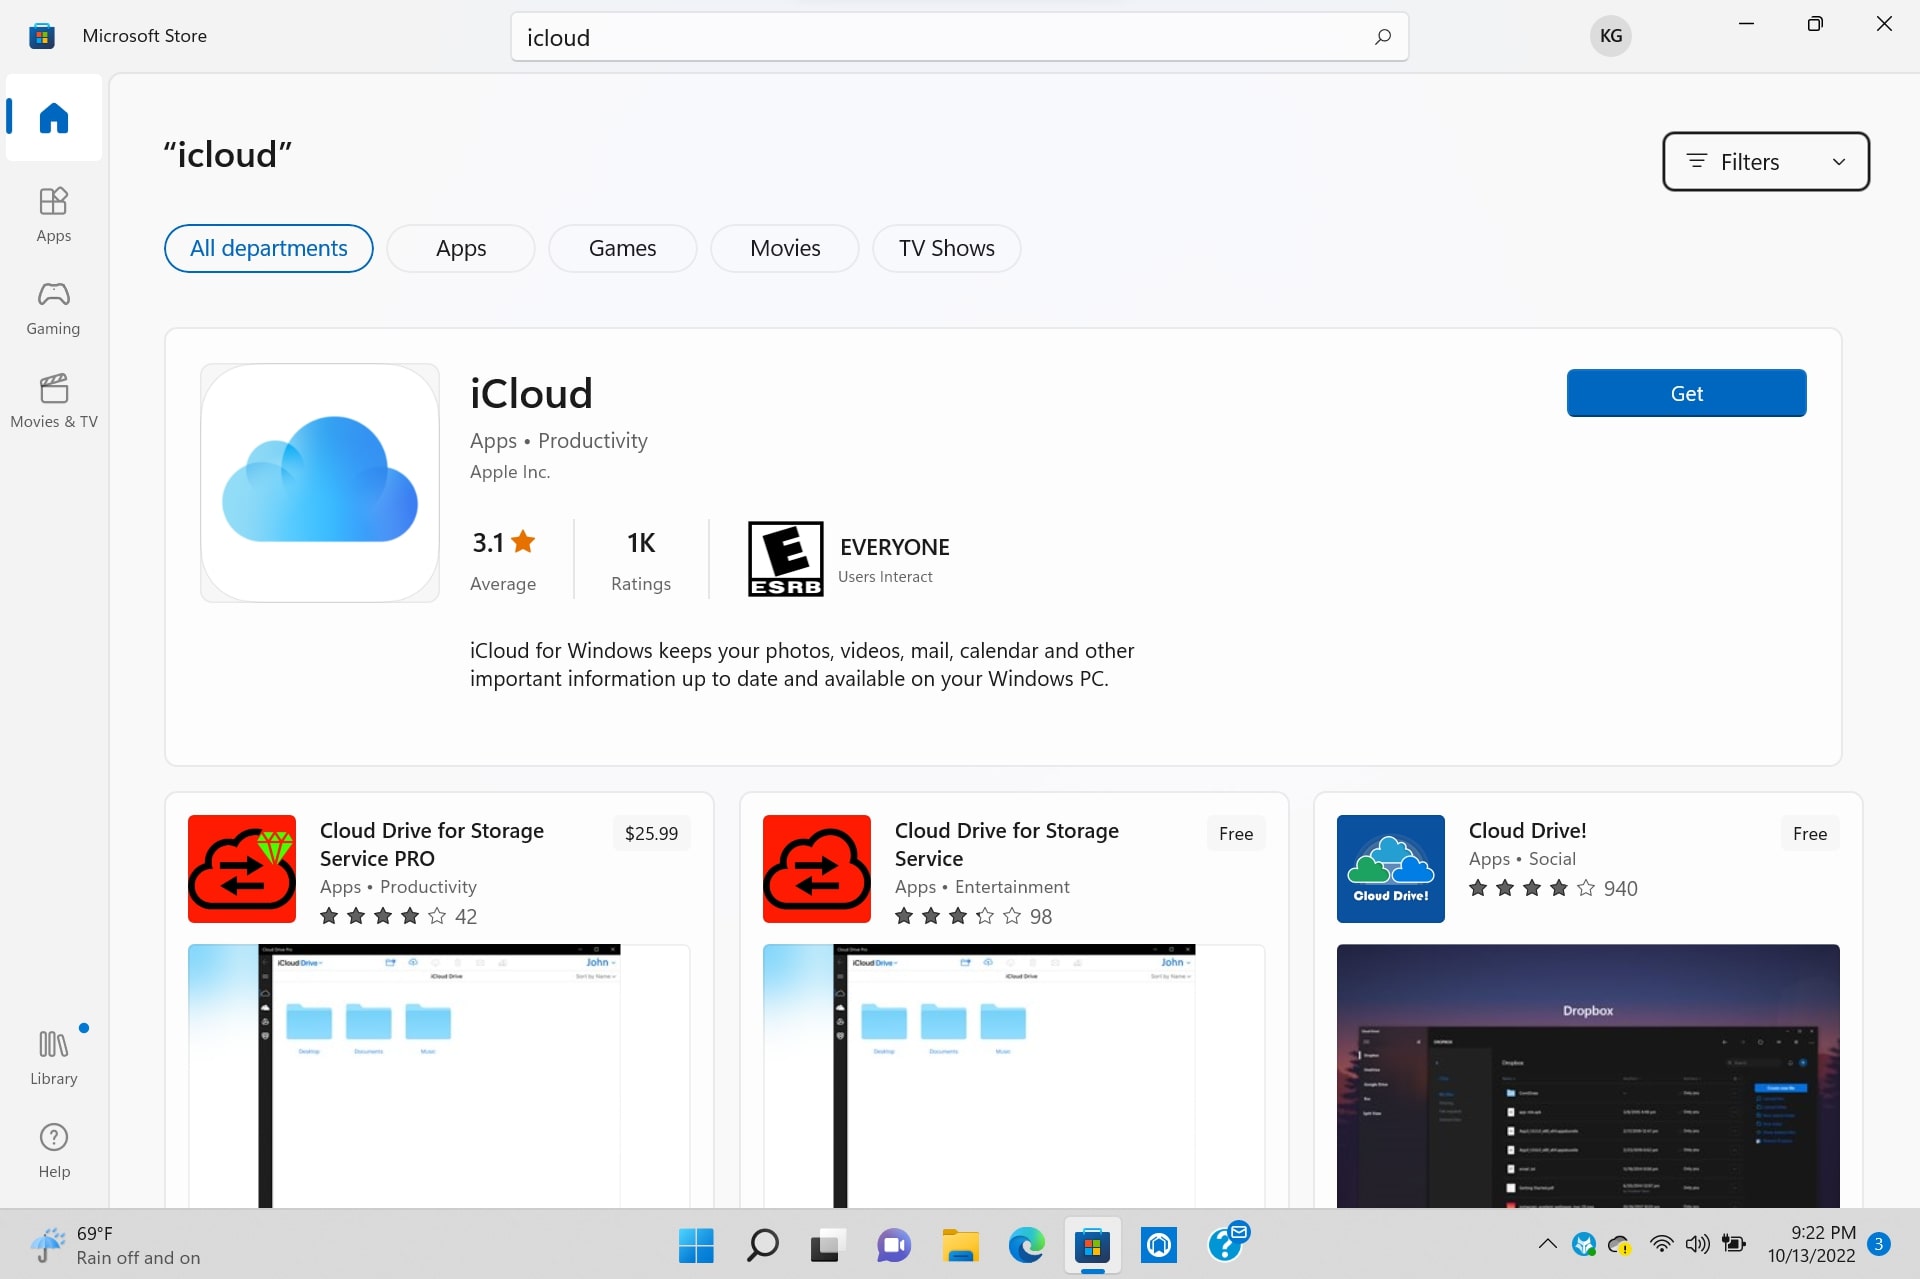 iCloud for Windows app